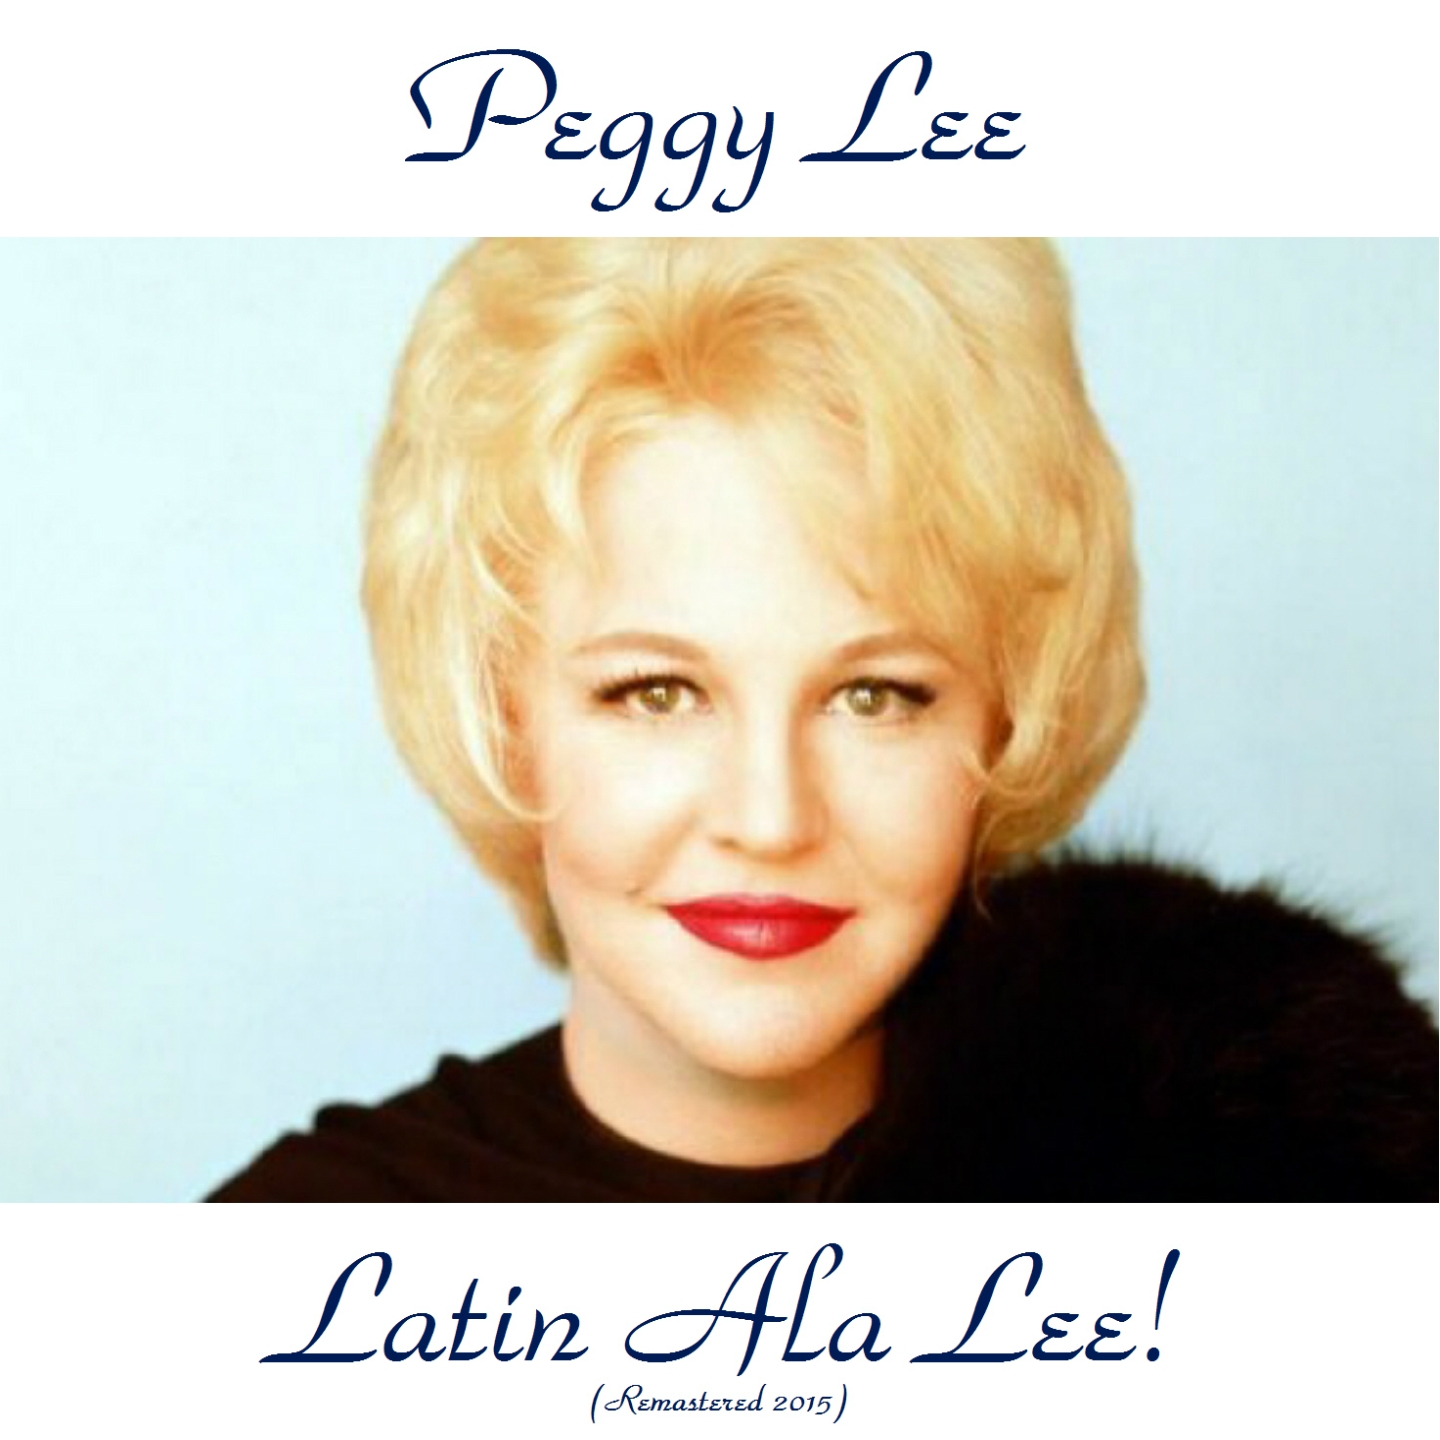 Latin Ala Lee! (Remastered 2015)